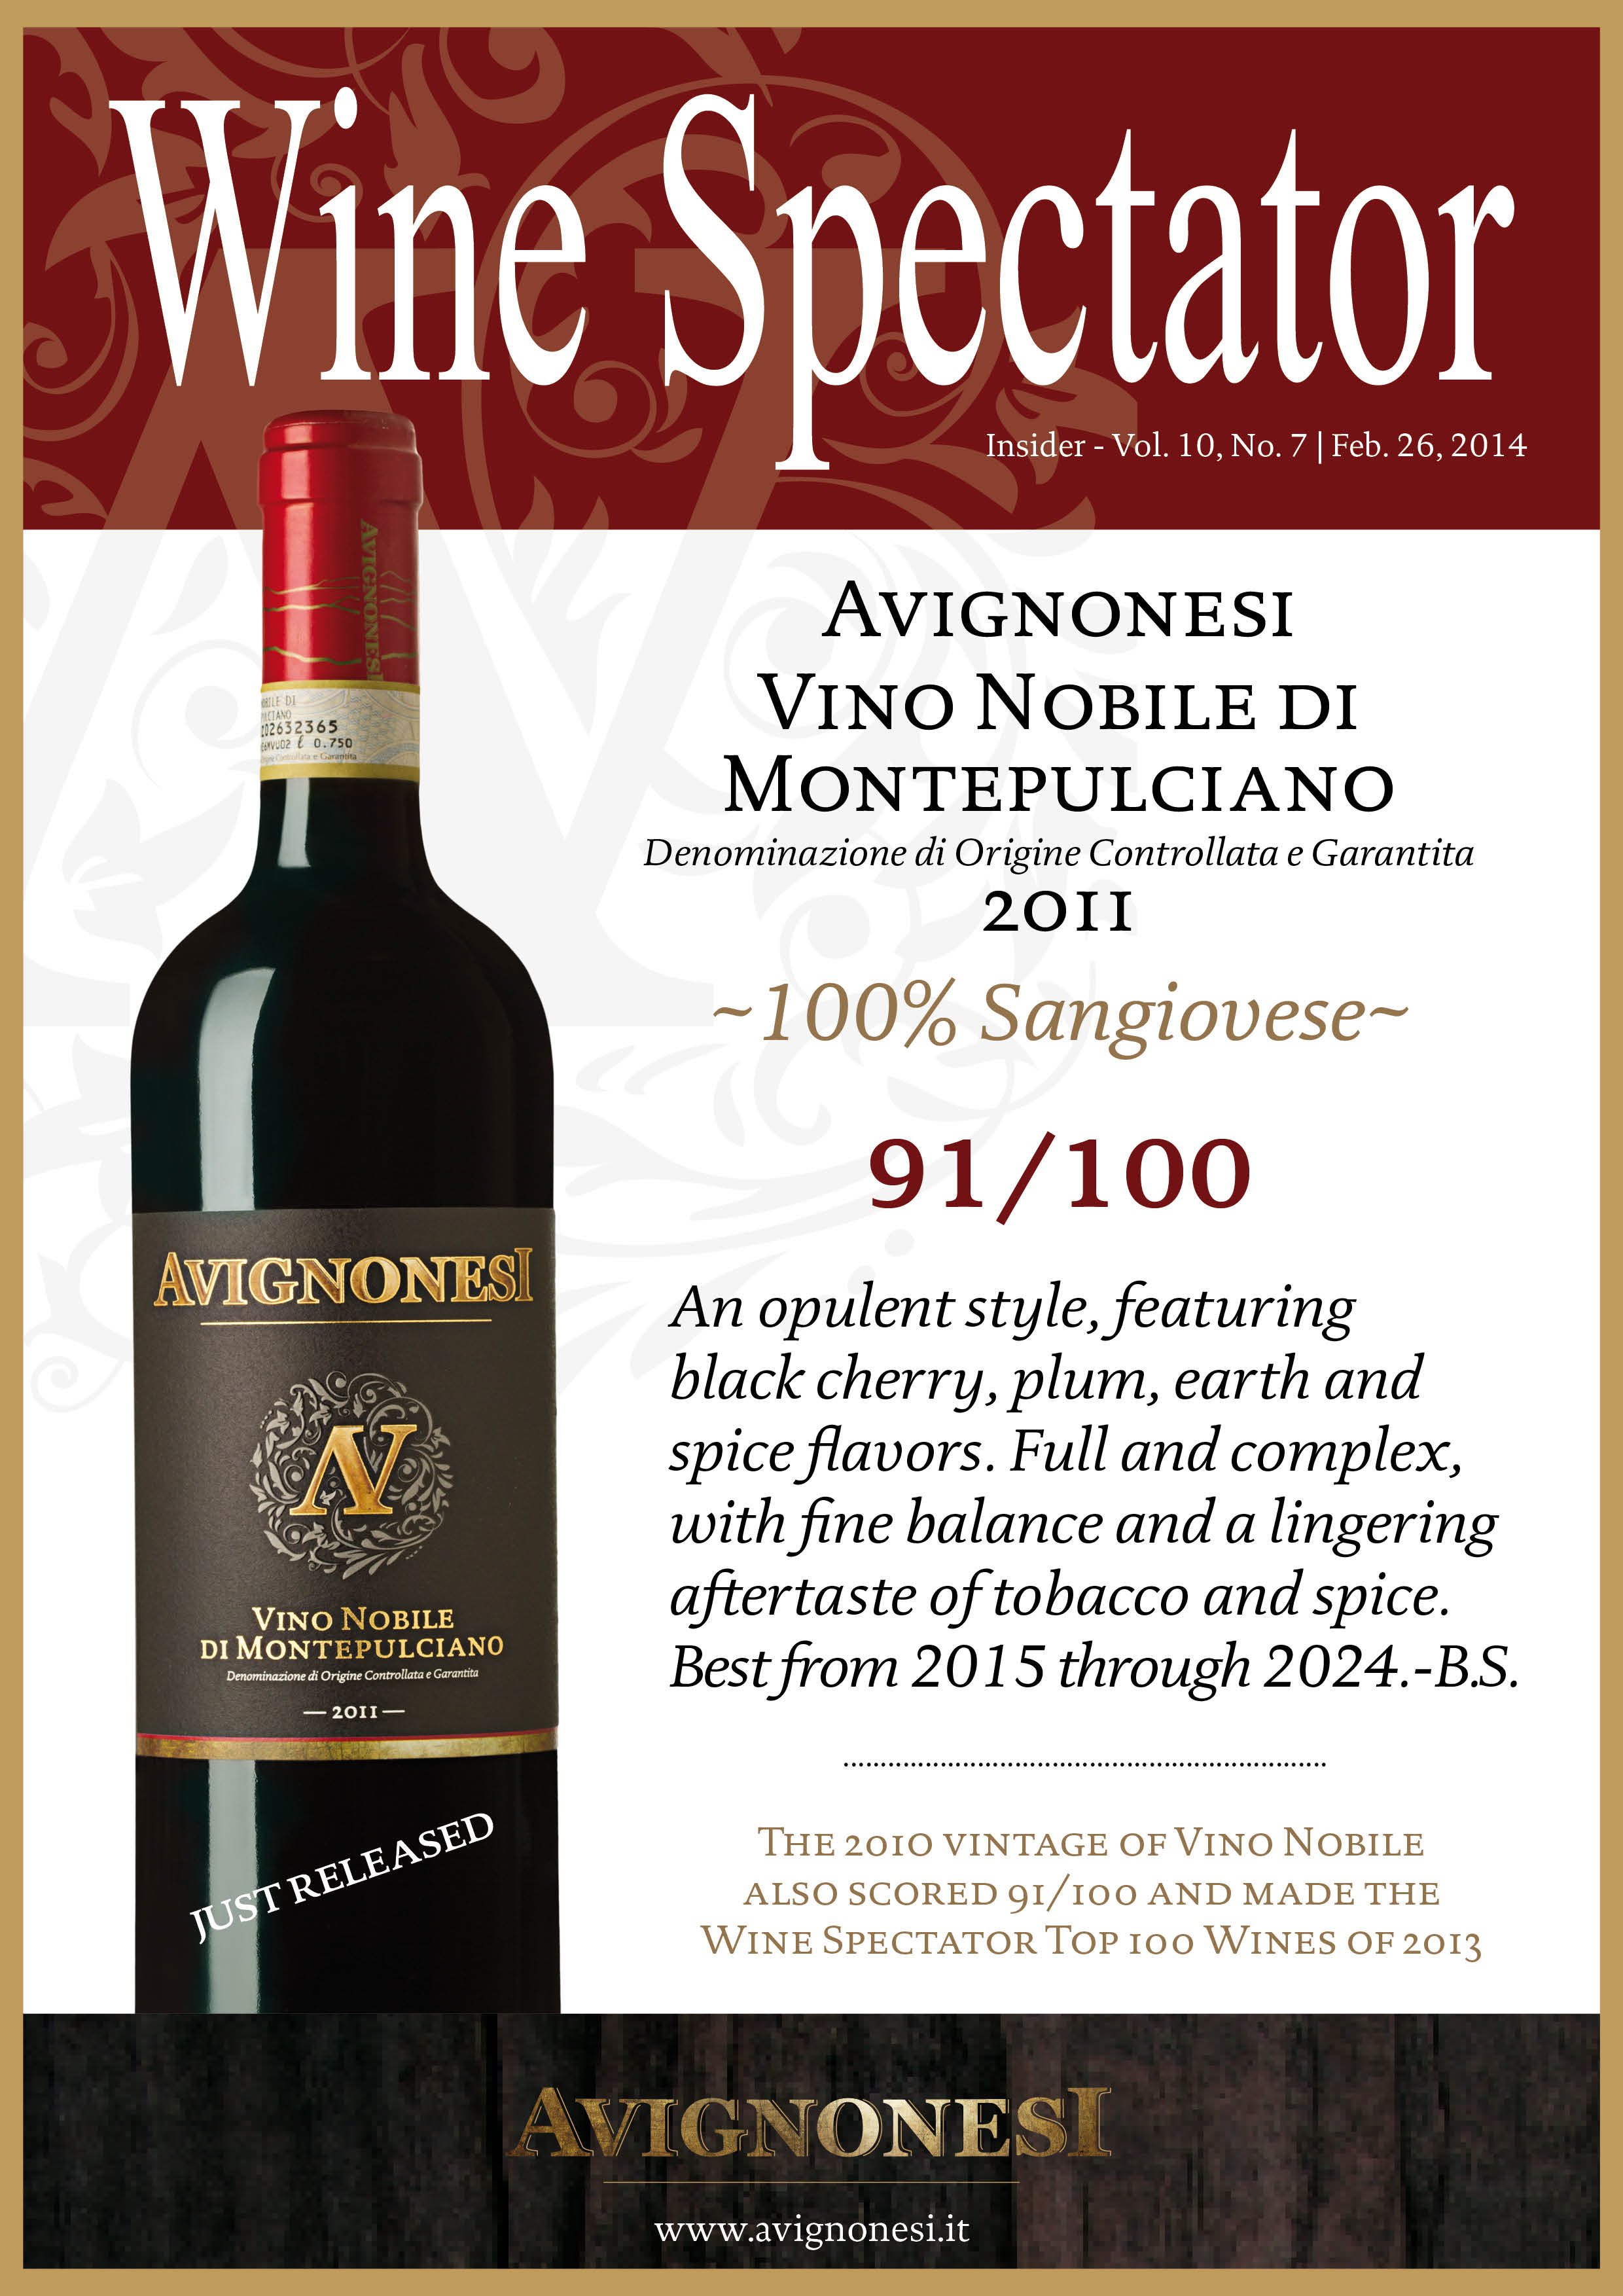 AVIGNONESI WINE NOBILE - A WINE SPECTATOR SUCCESS